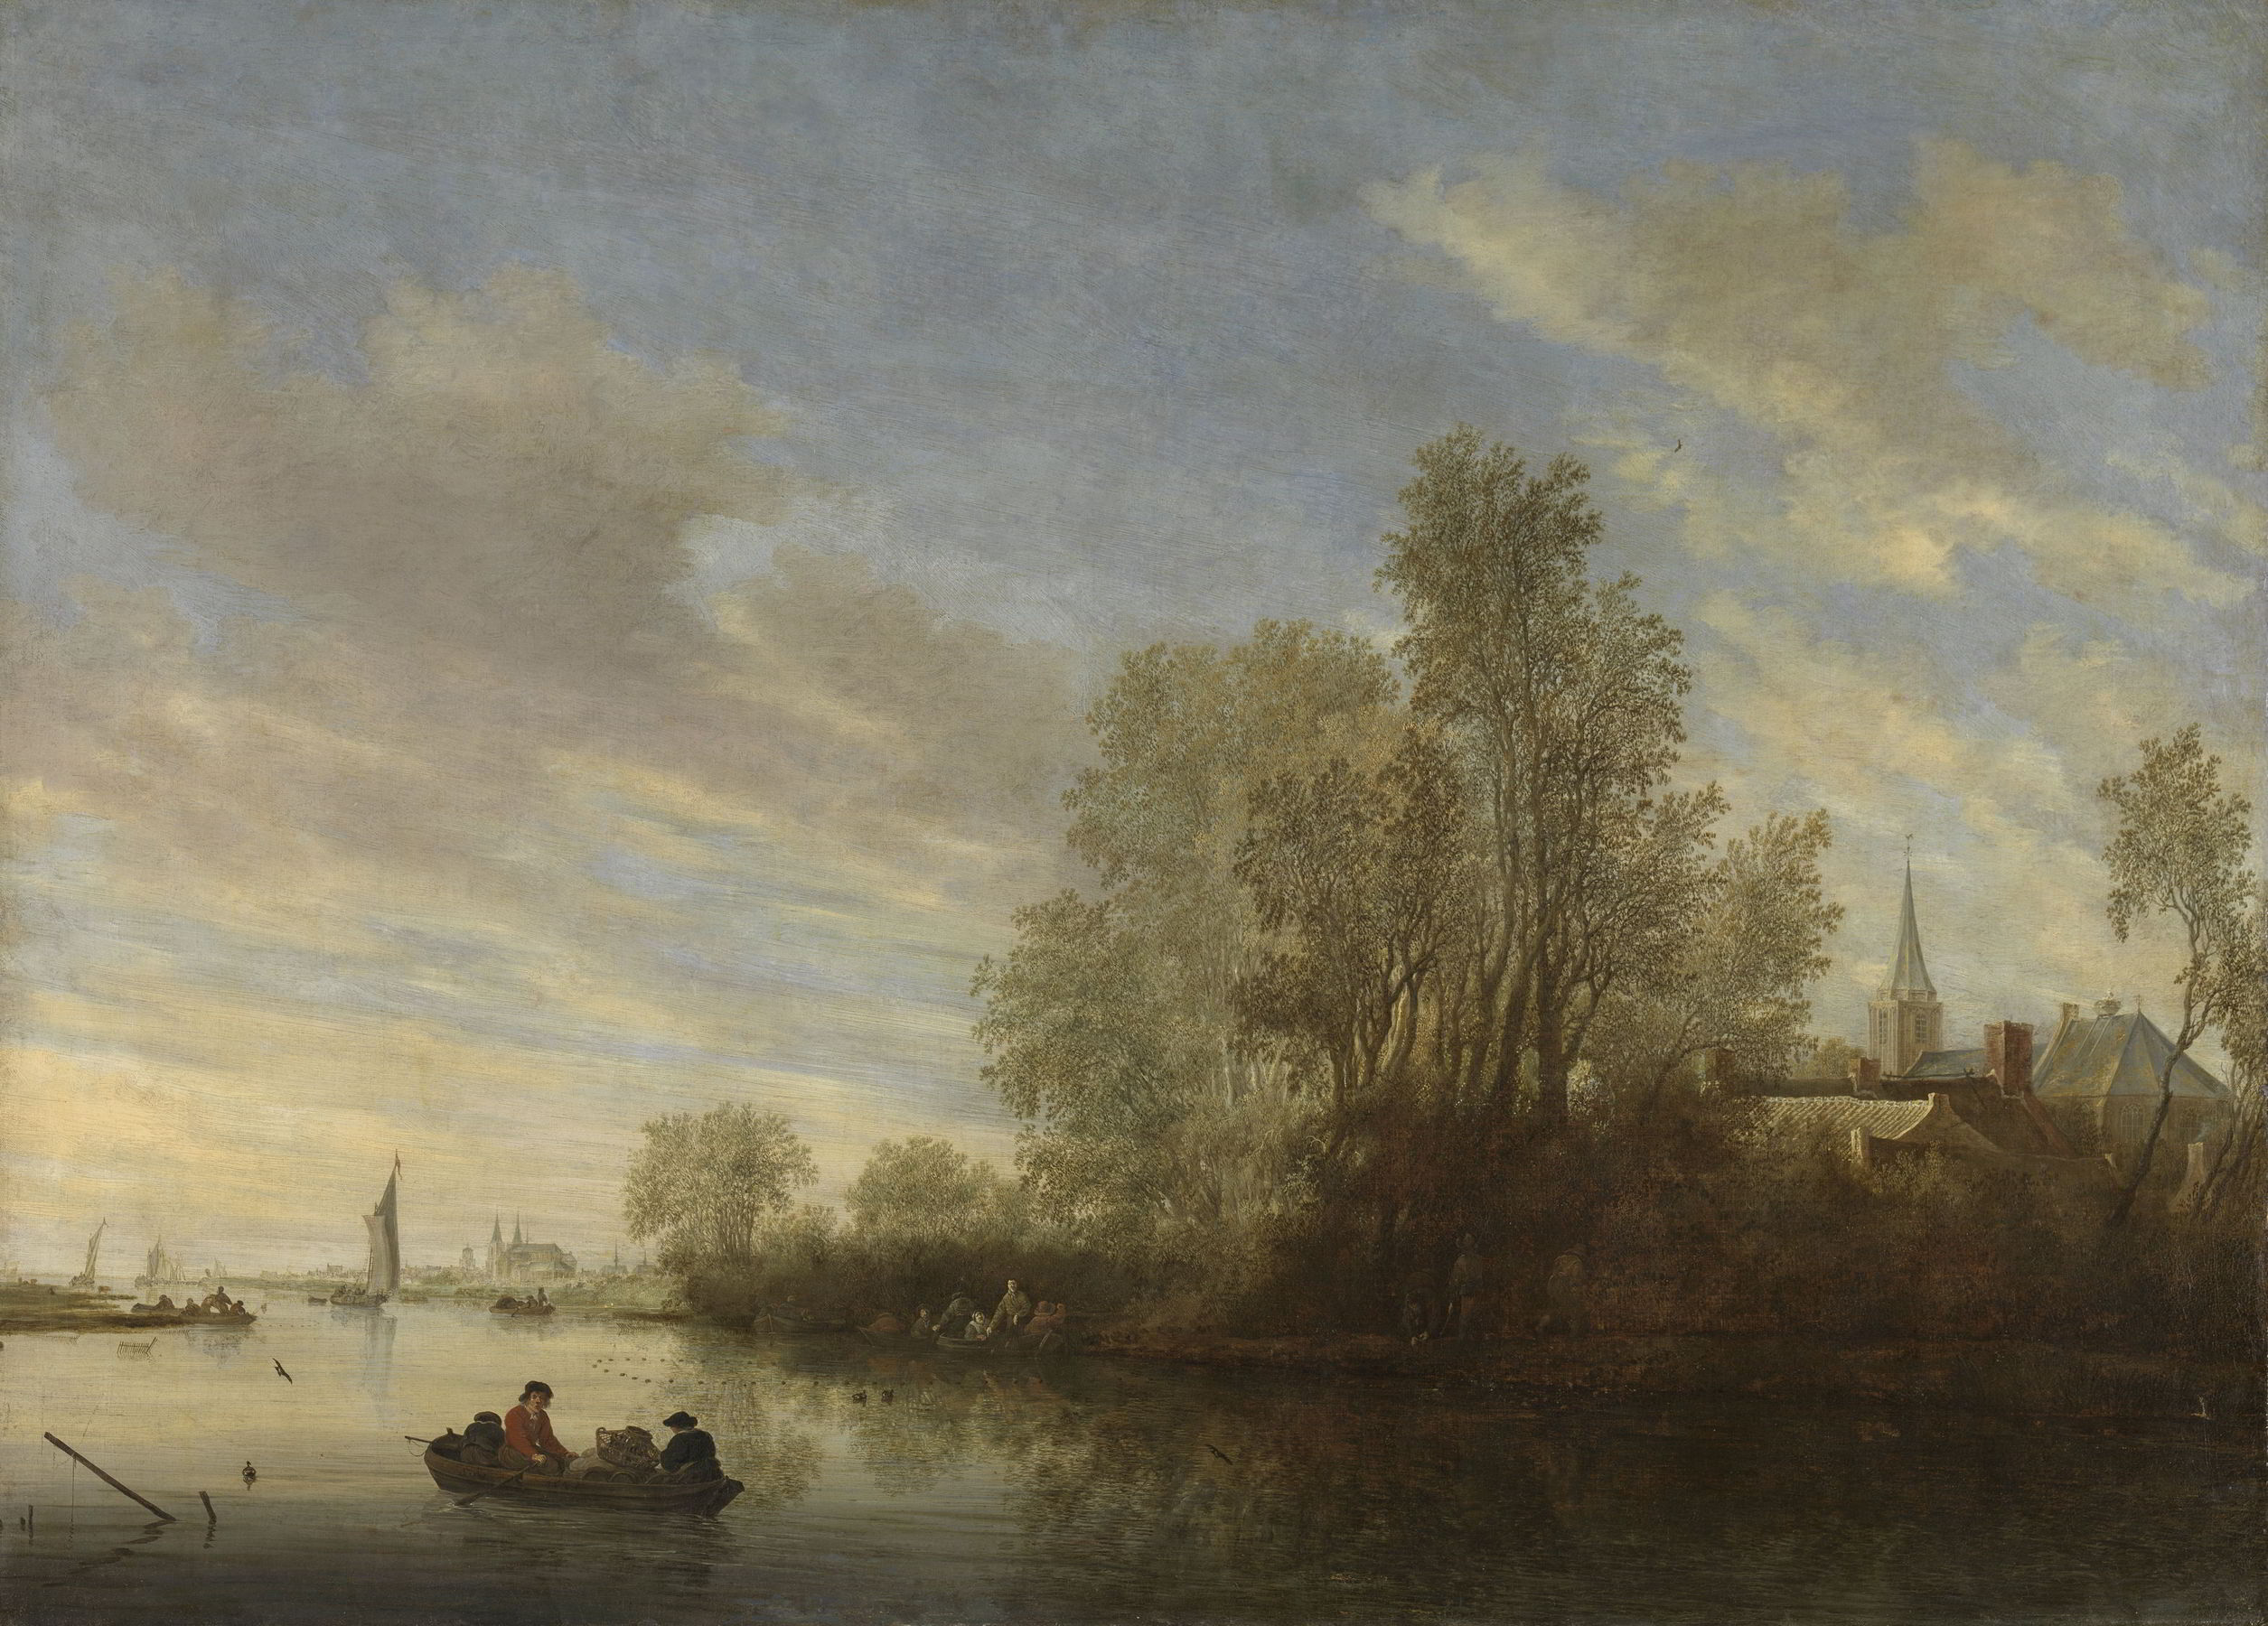 River View near Deventer by Salomon van Ruysdael